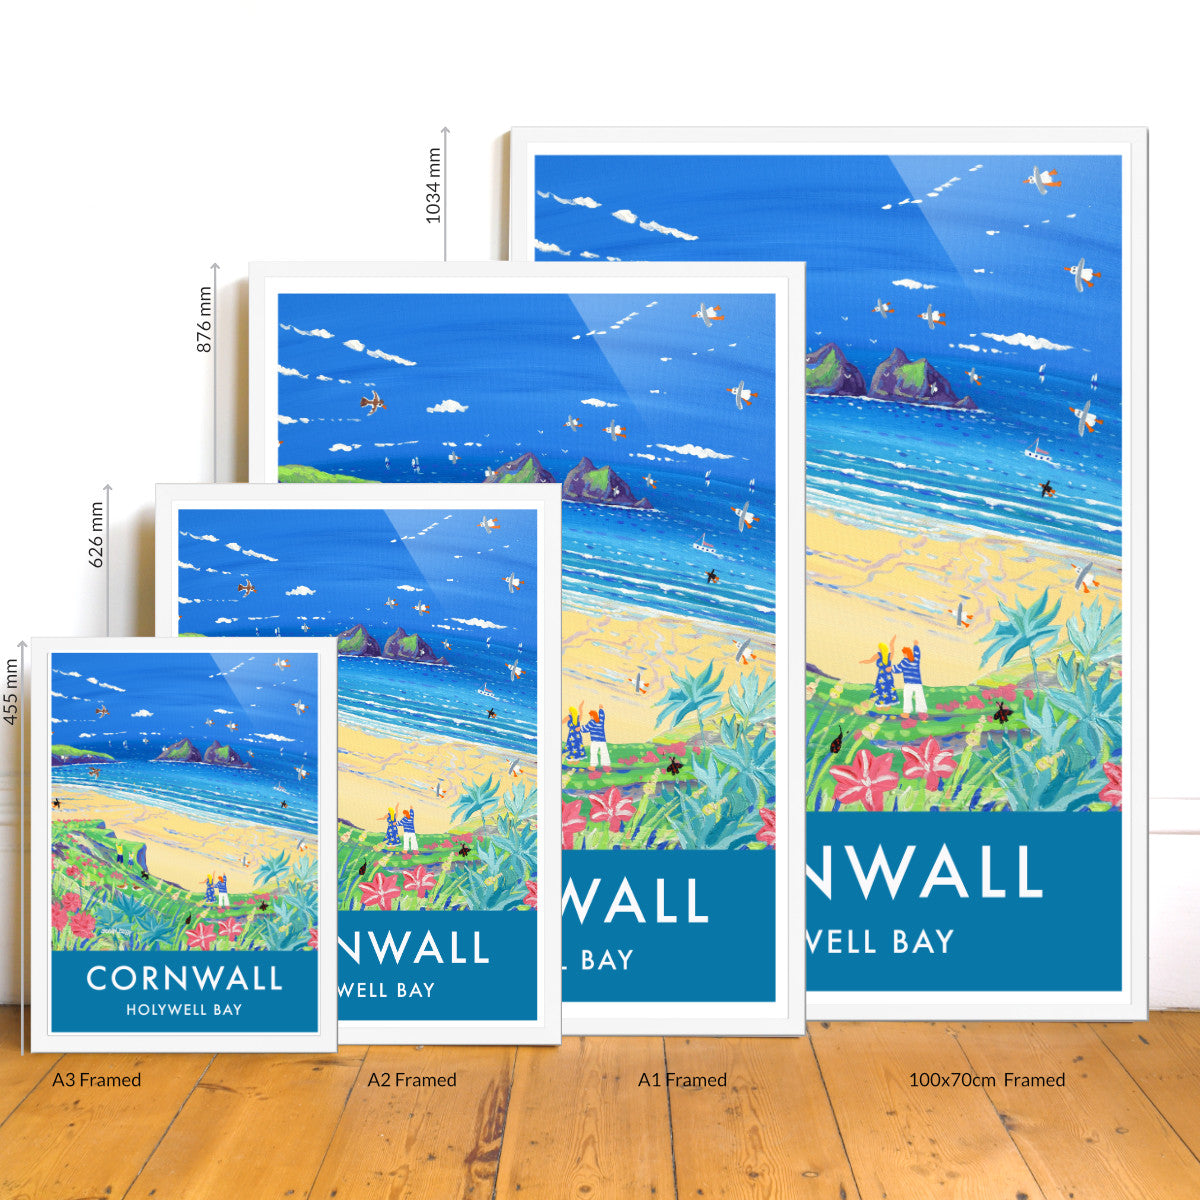 Vintage Style Seaside Travel Art Poster Print by Cornish Artist John Dyer. Holywell Bay Beach Cornwall